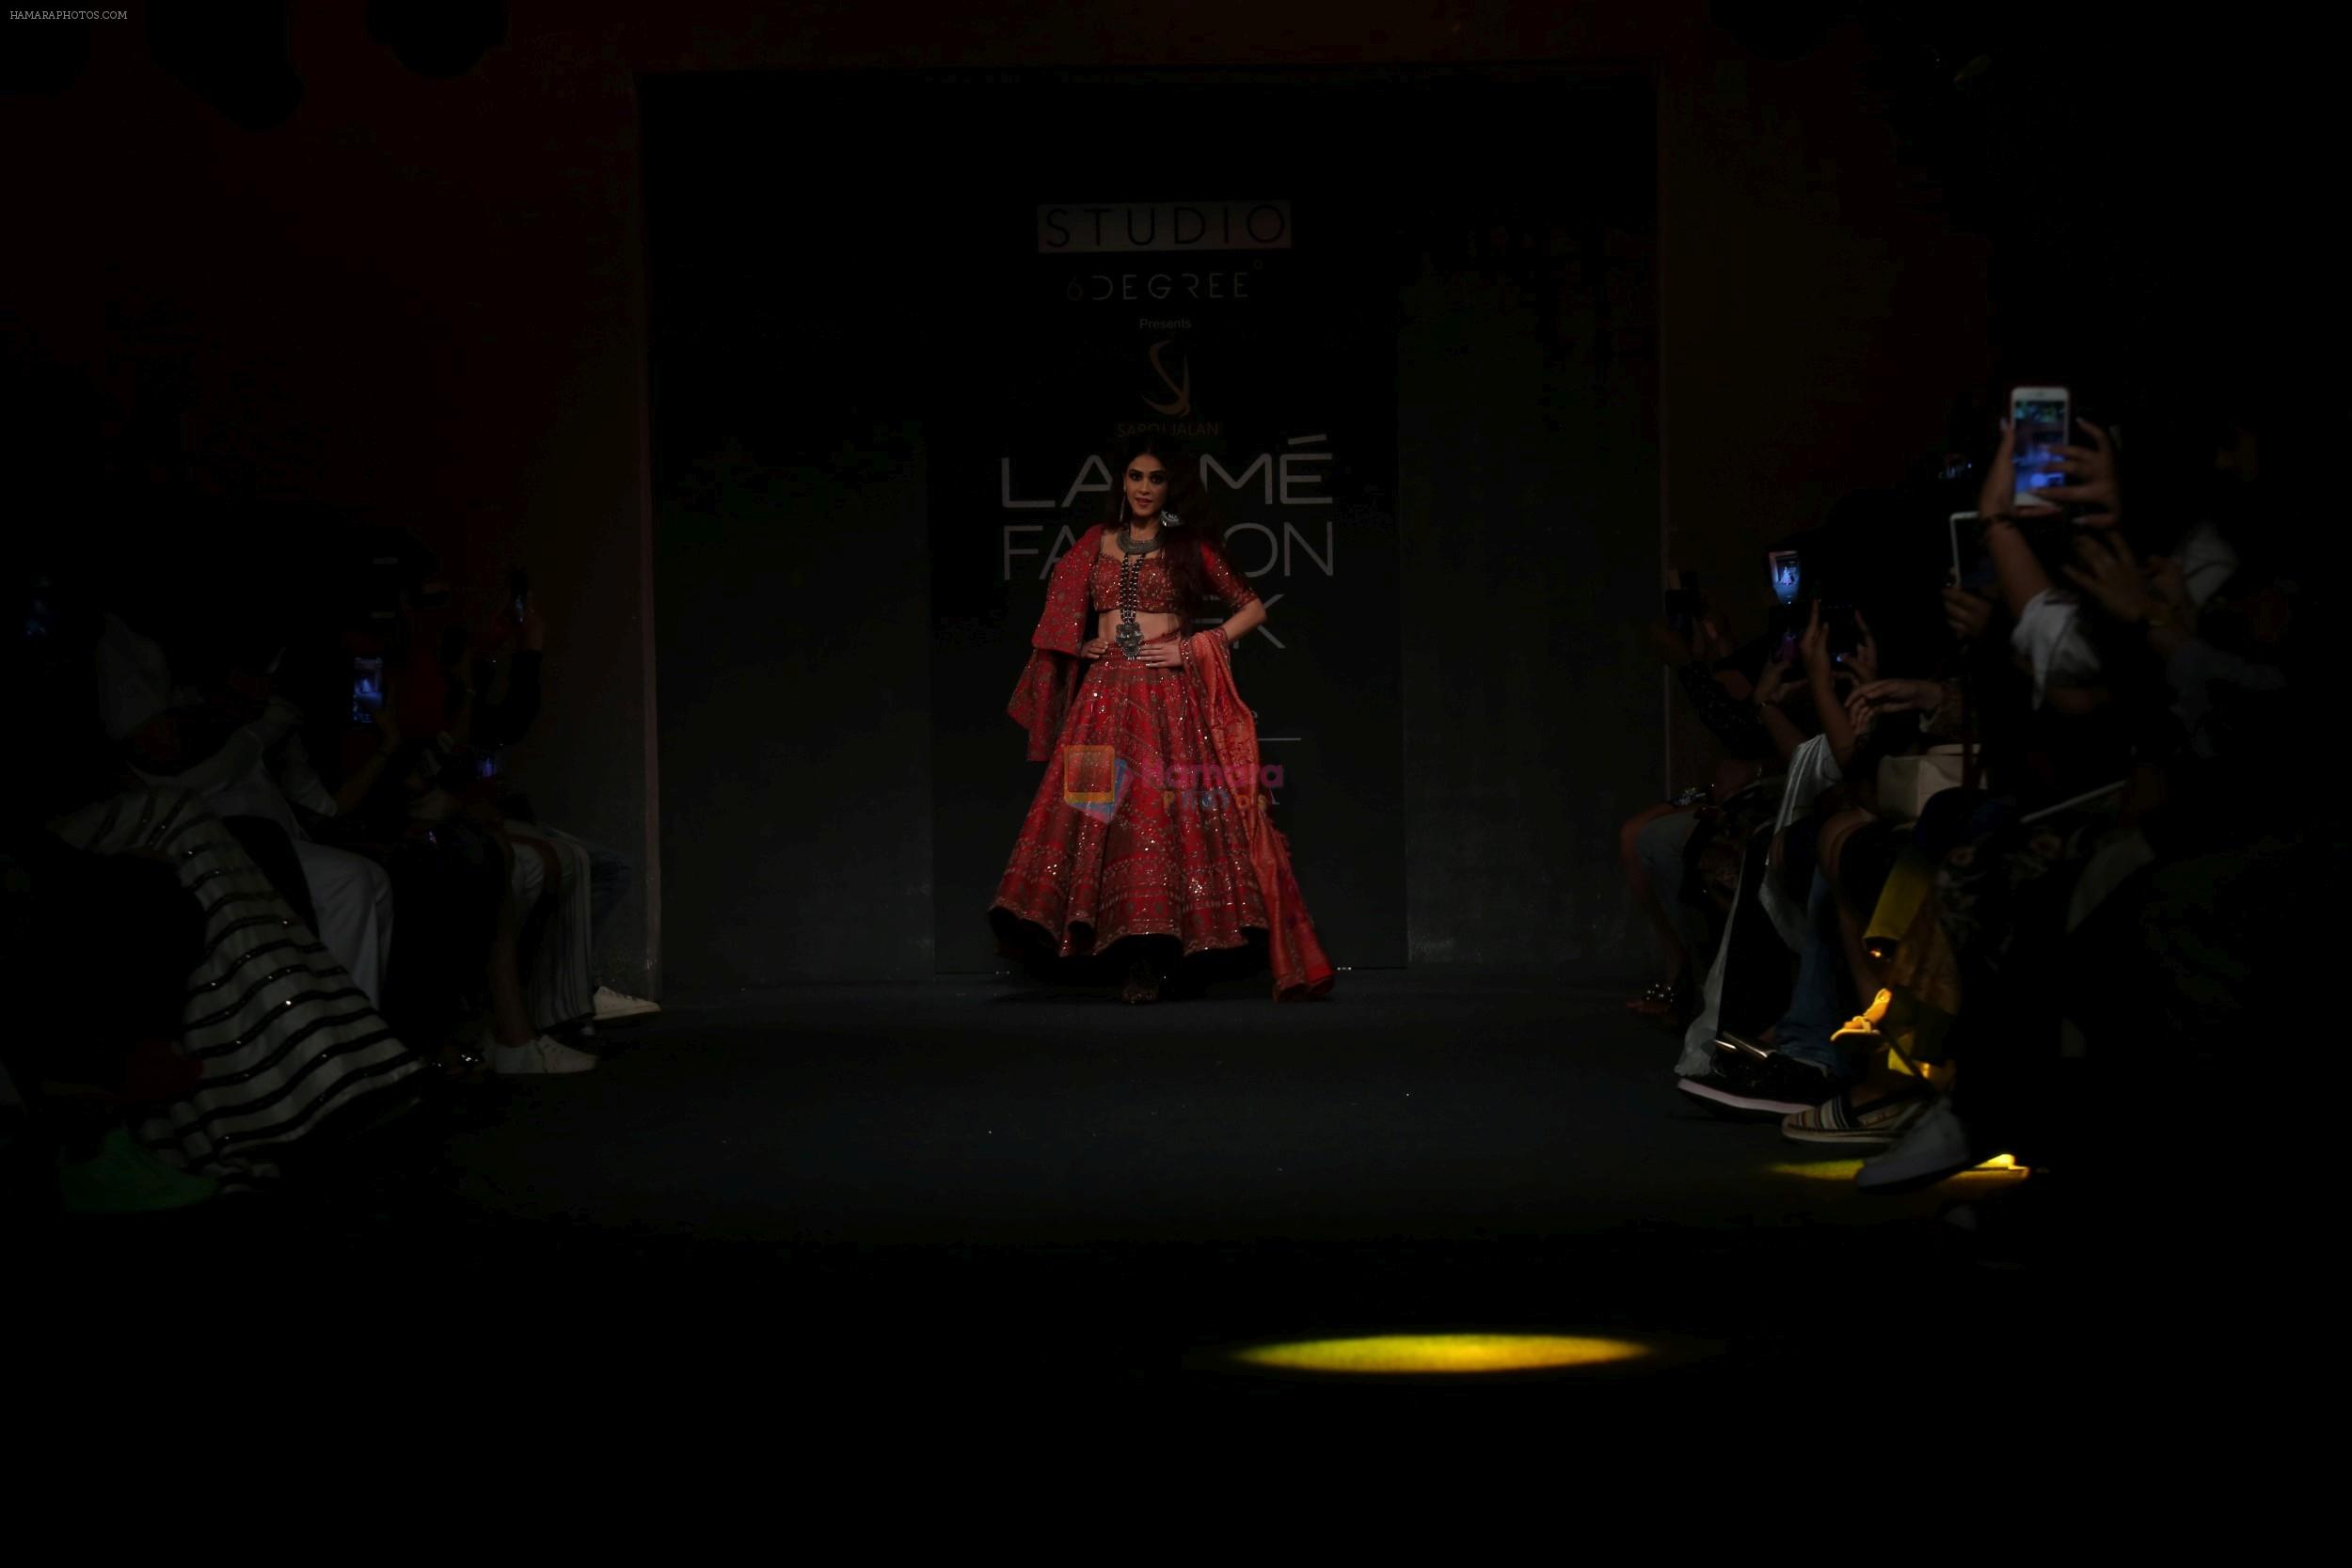 Genelia D'souza walk the ramp for Saroj Jalan At lakme fashion week 2019 on 25th Aug 2019